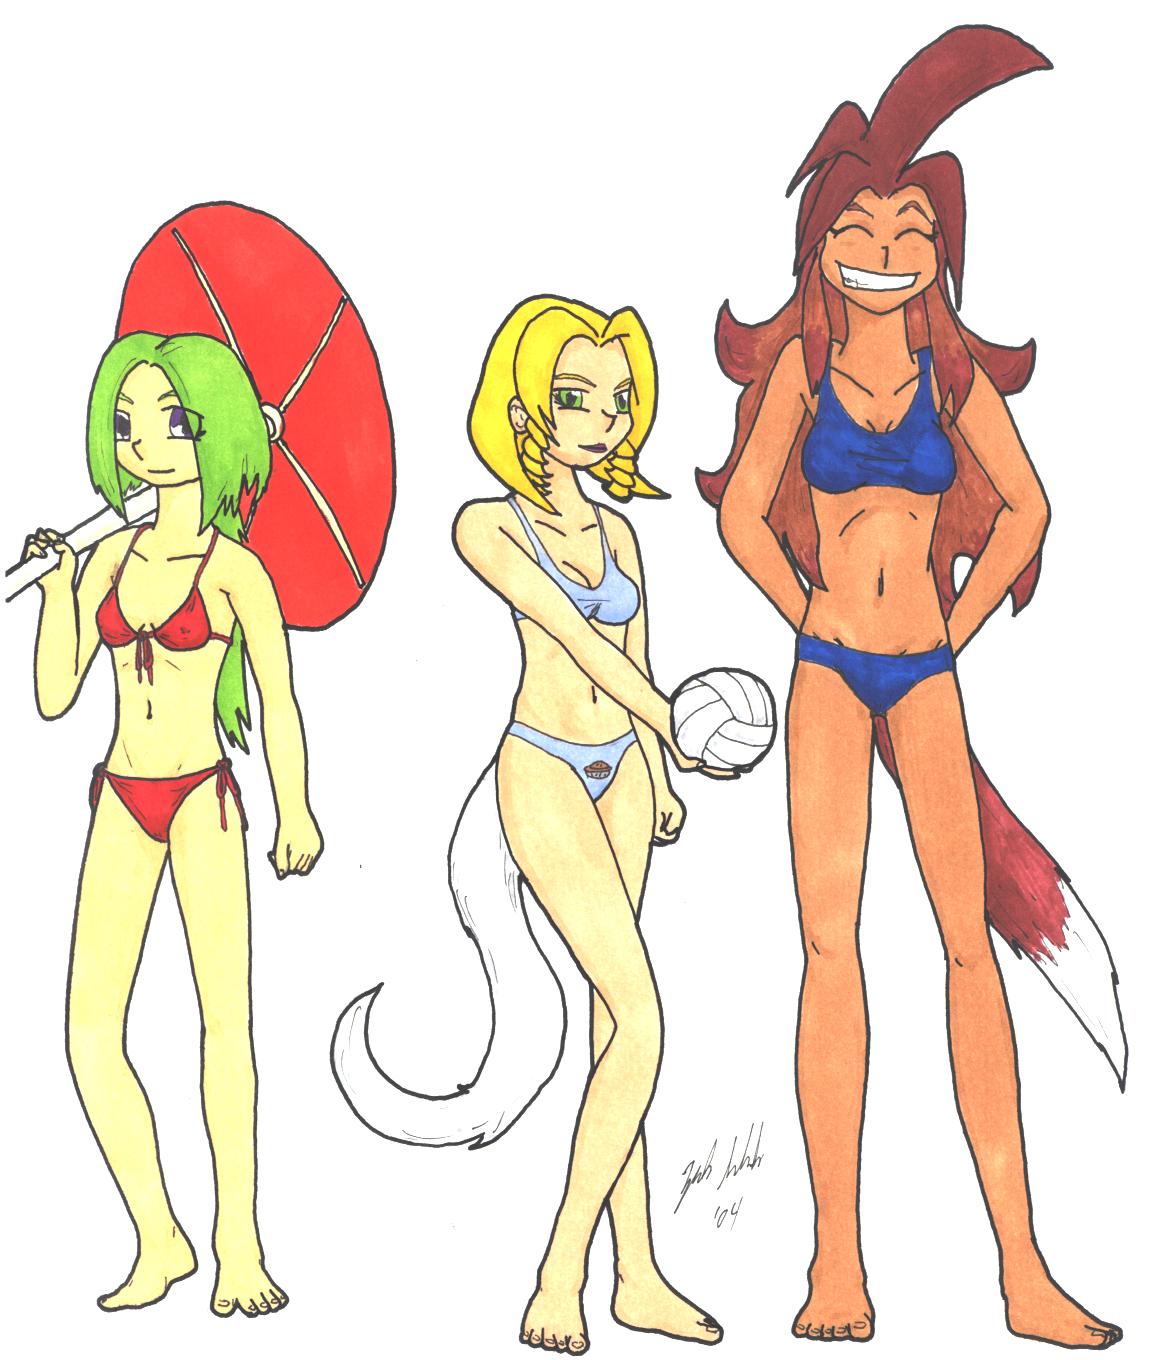 The Pie Girls-Bikini Time by Kupo-the-Avenger